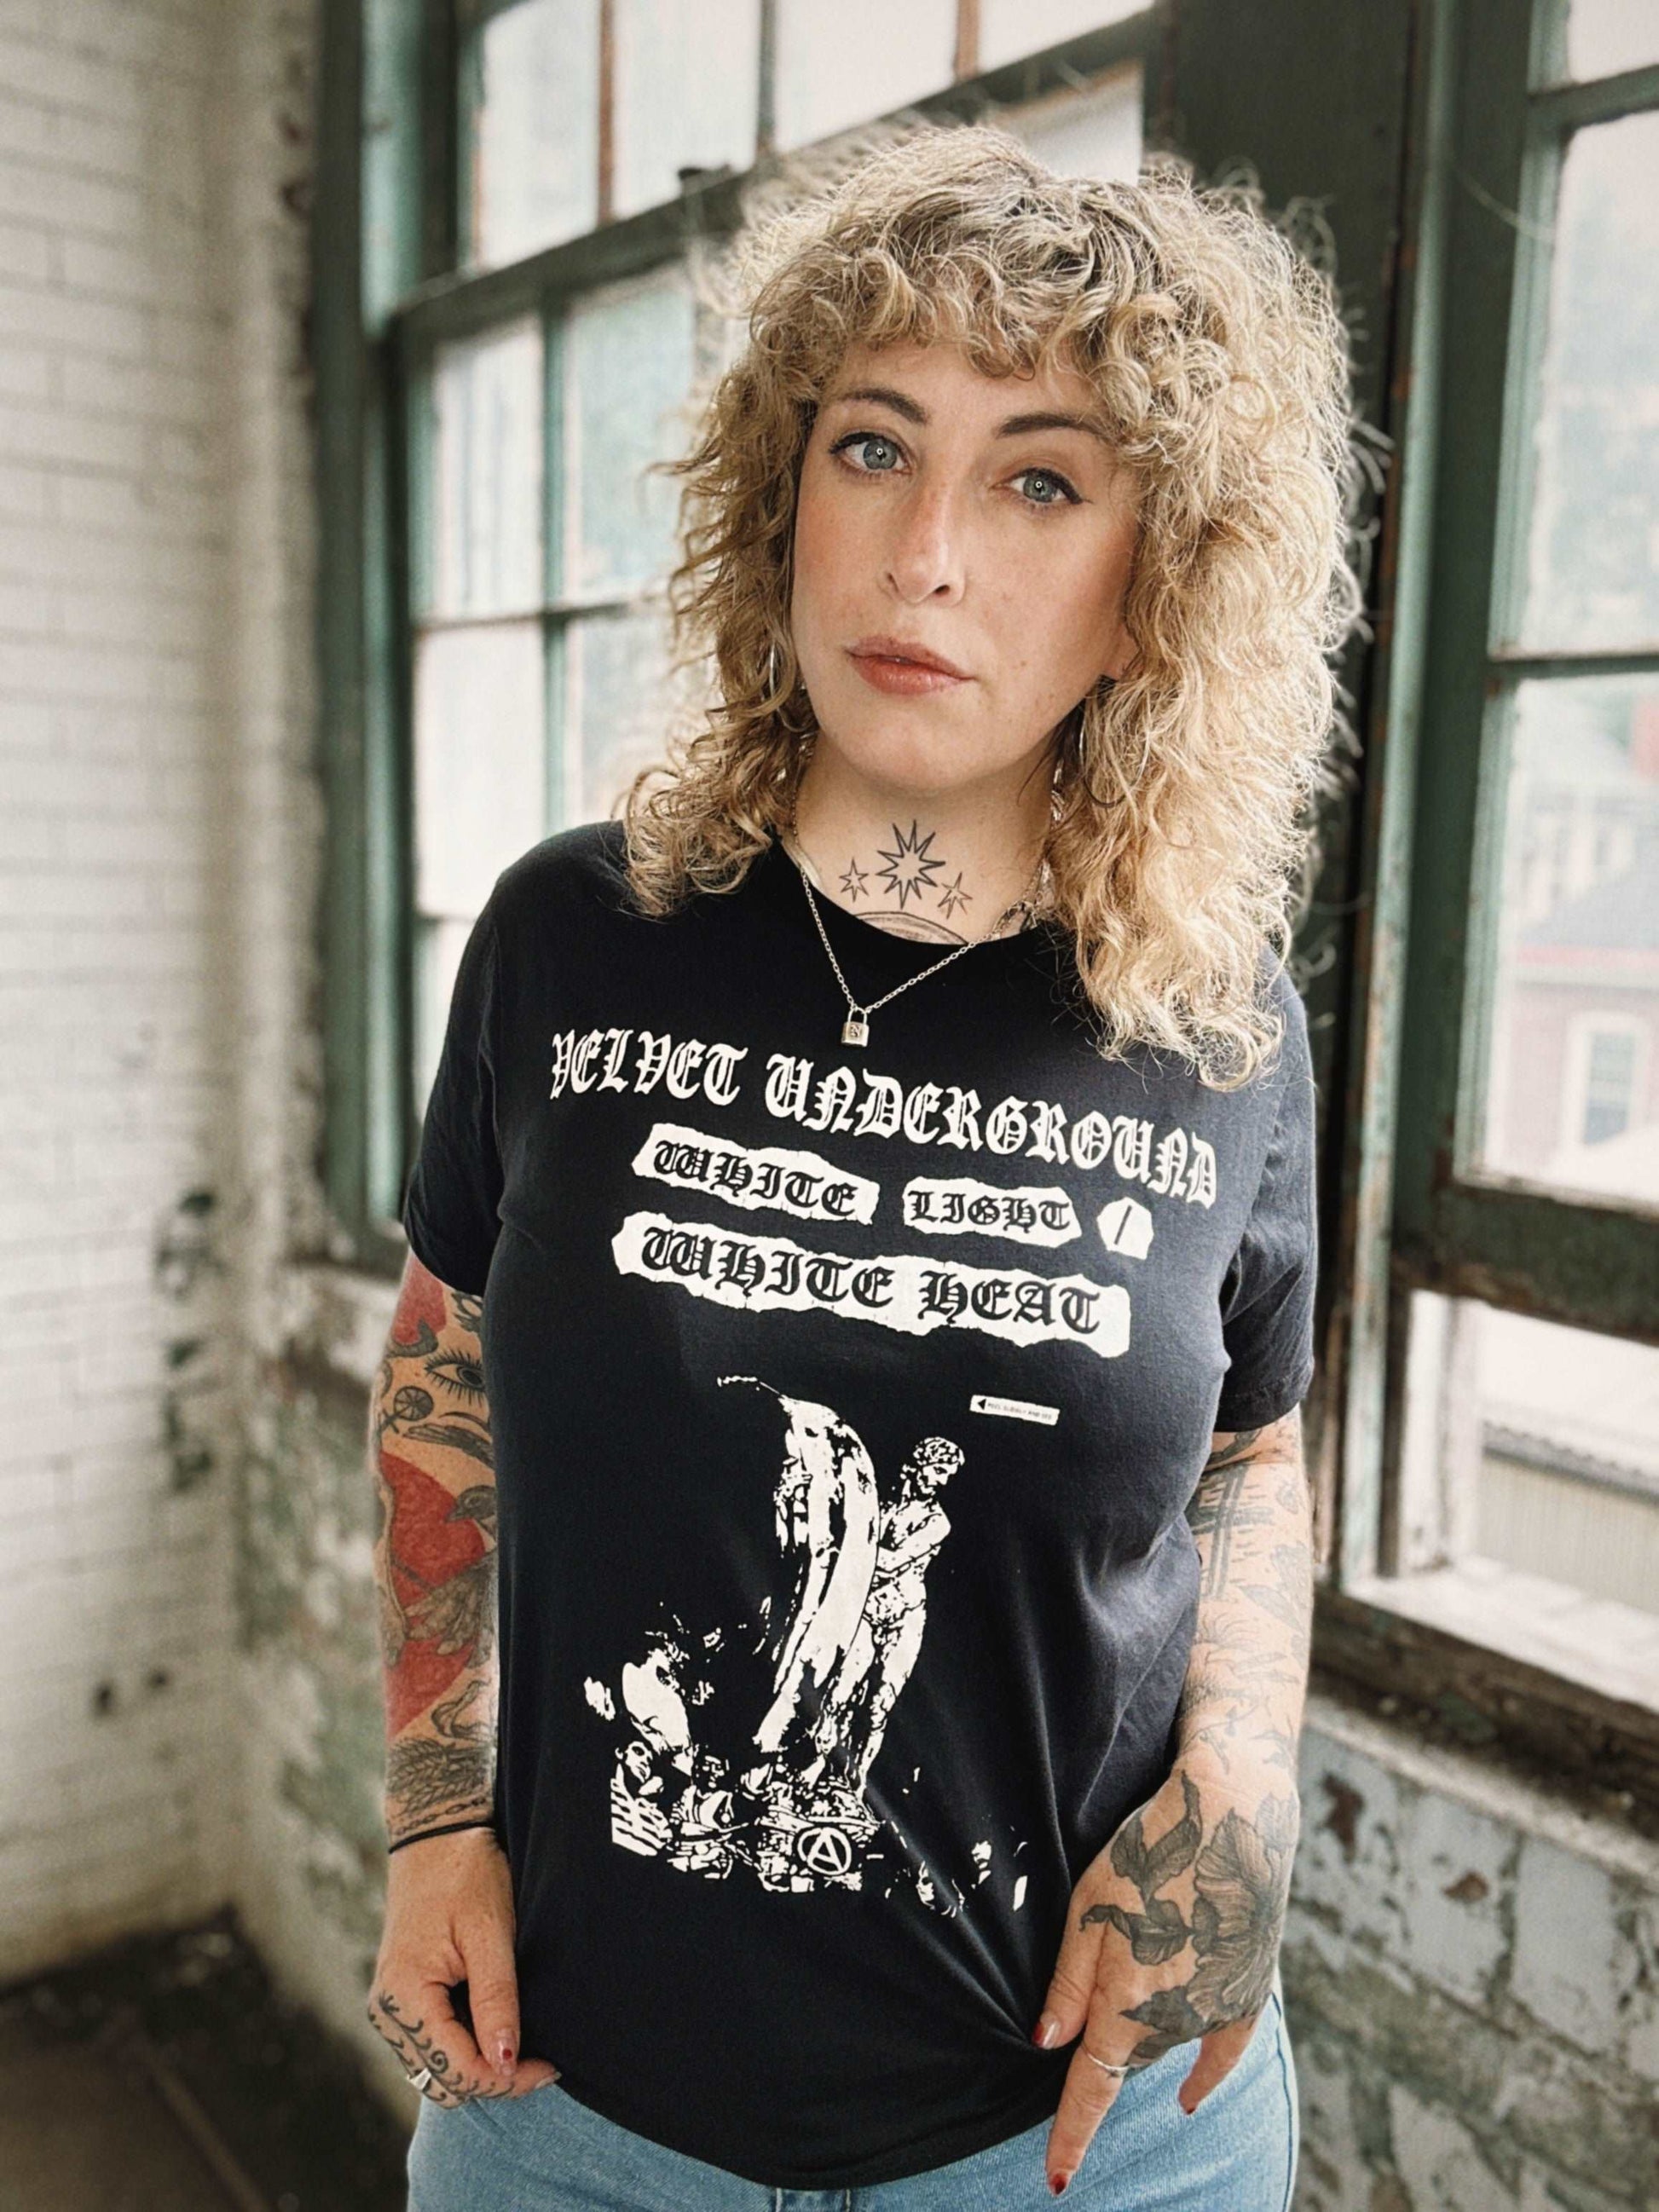 Velvet Underground // Reagan Youth Punk T-shirt